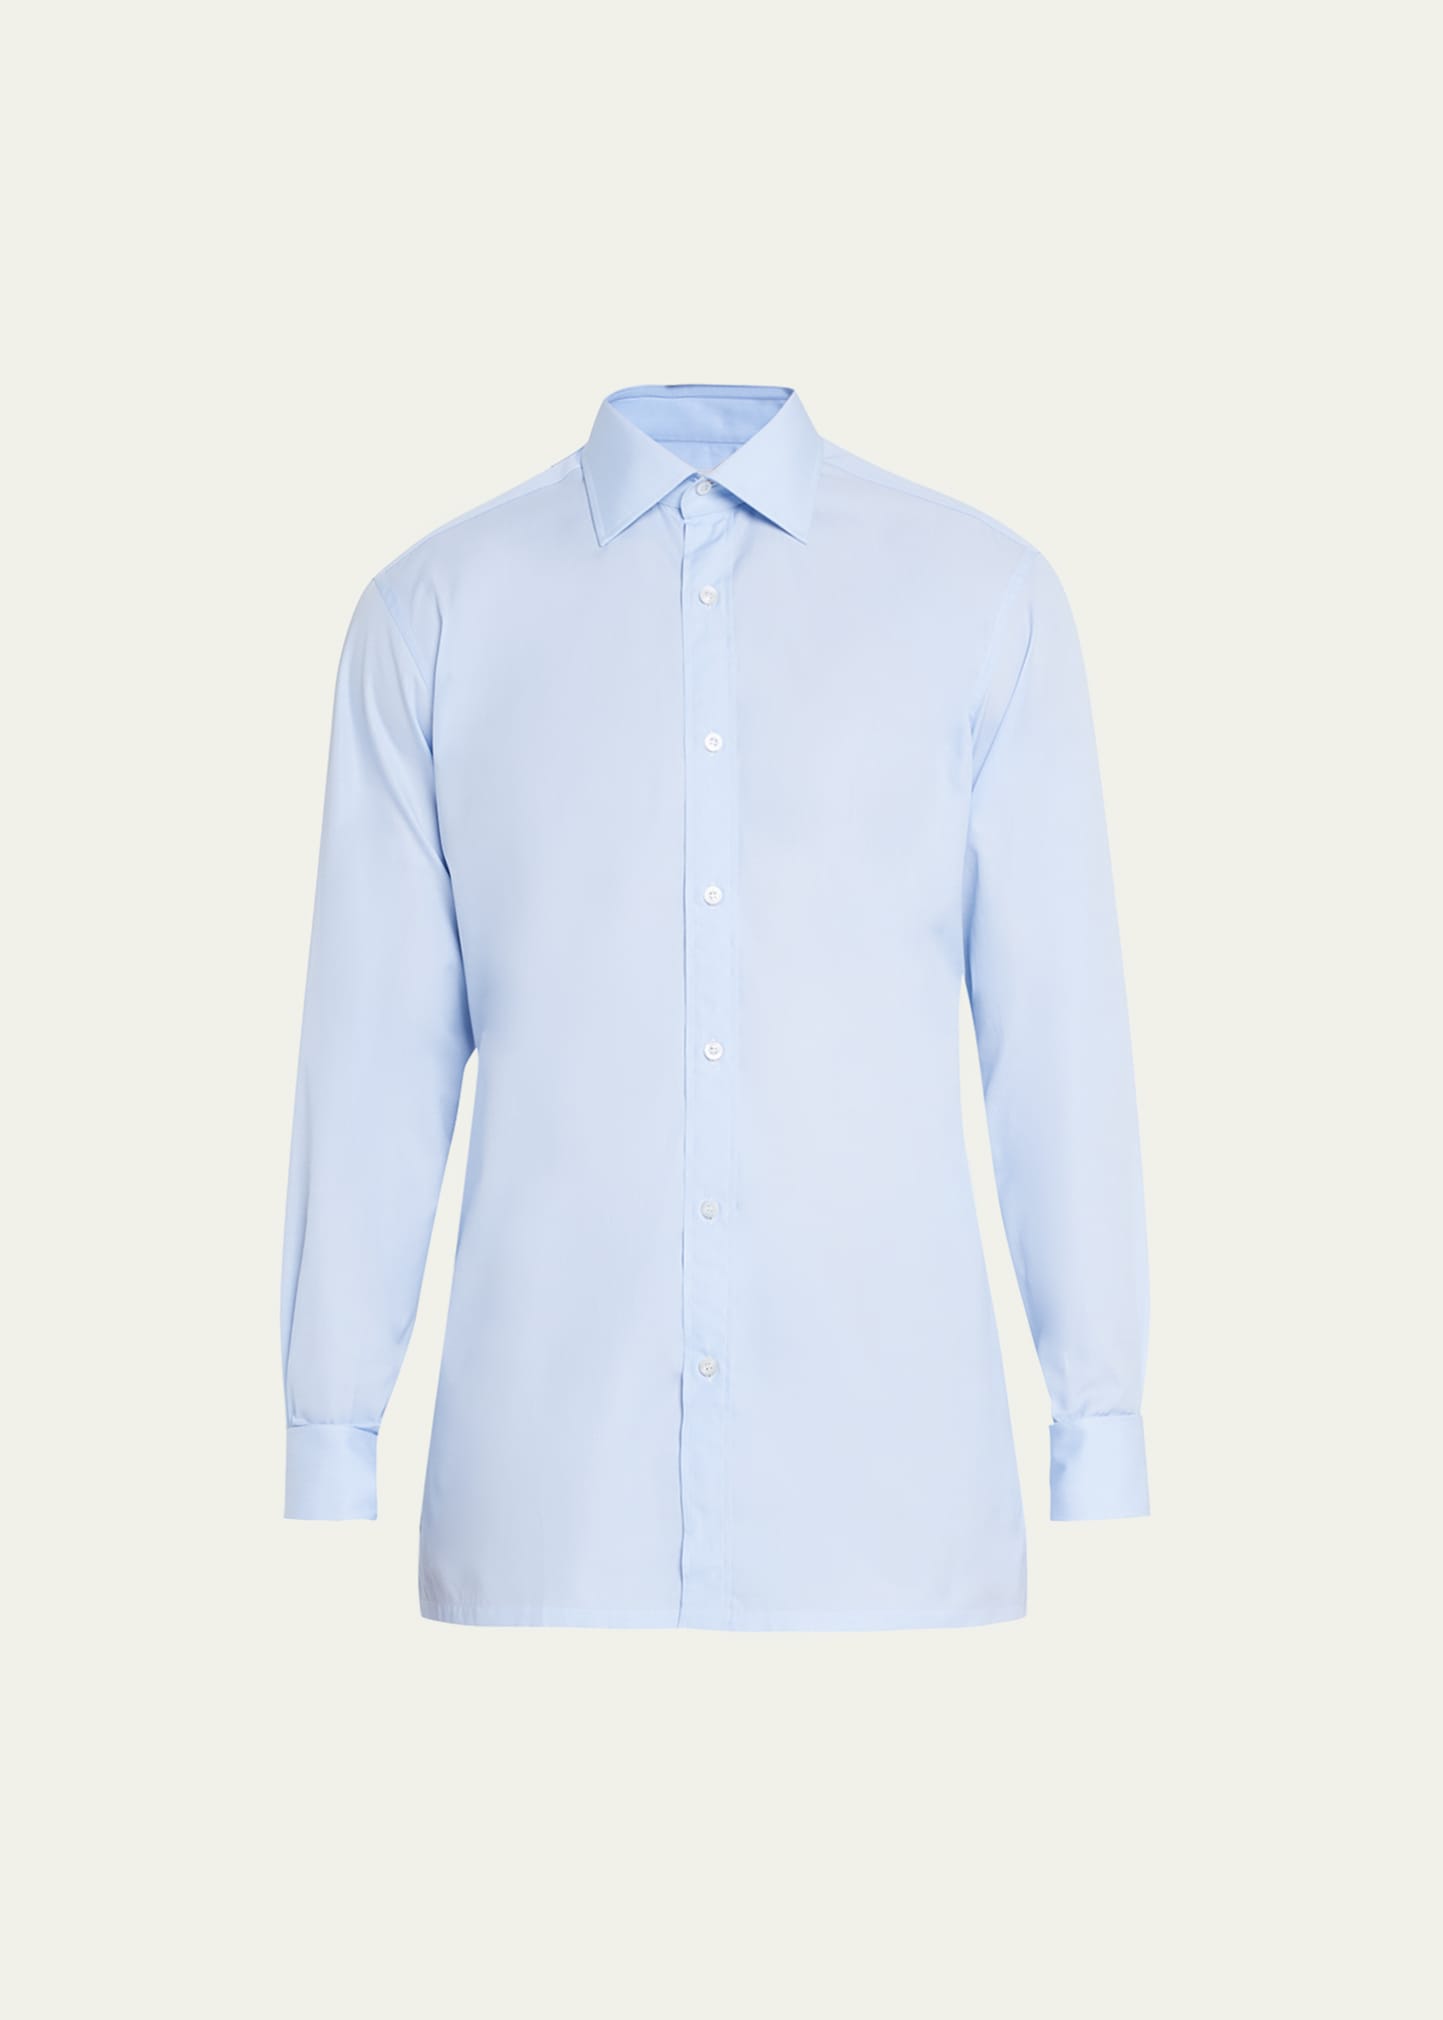 Charvet Men's French Cuff Cotton Dress Shirt In Blue